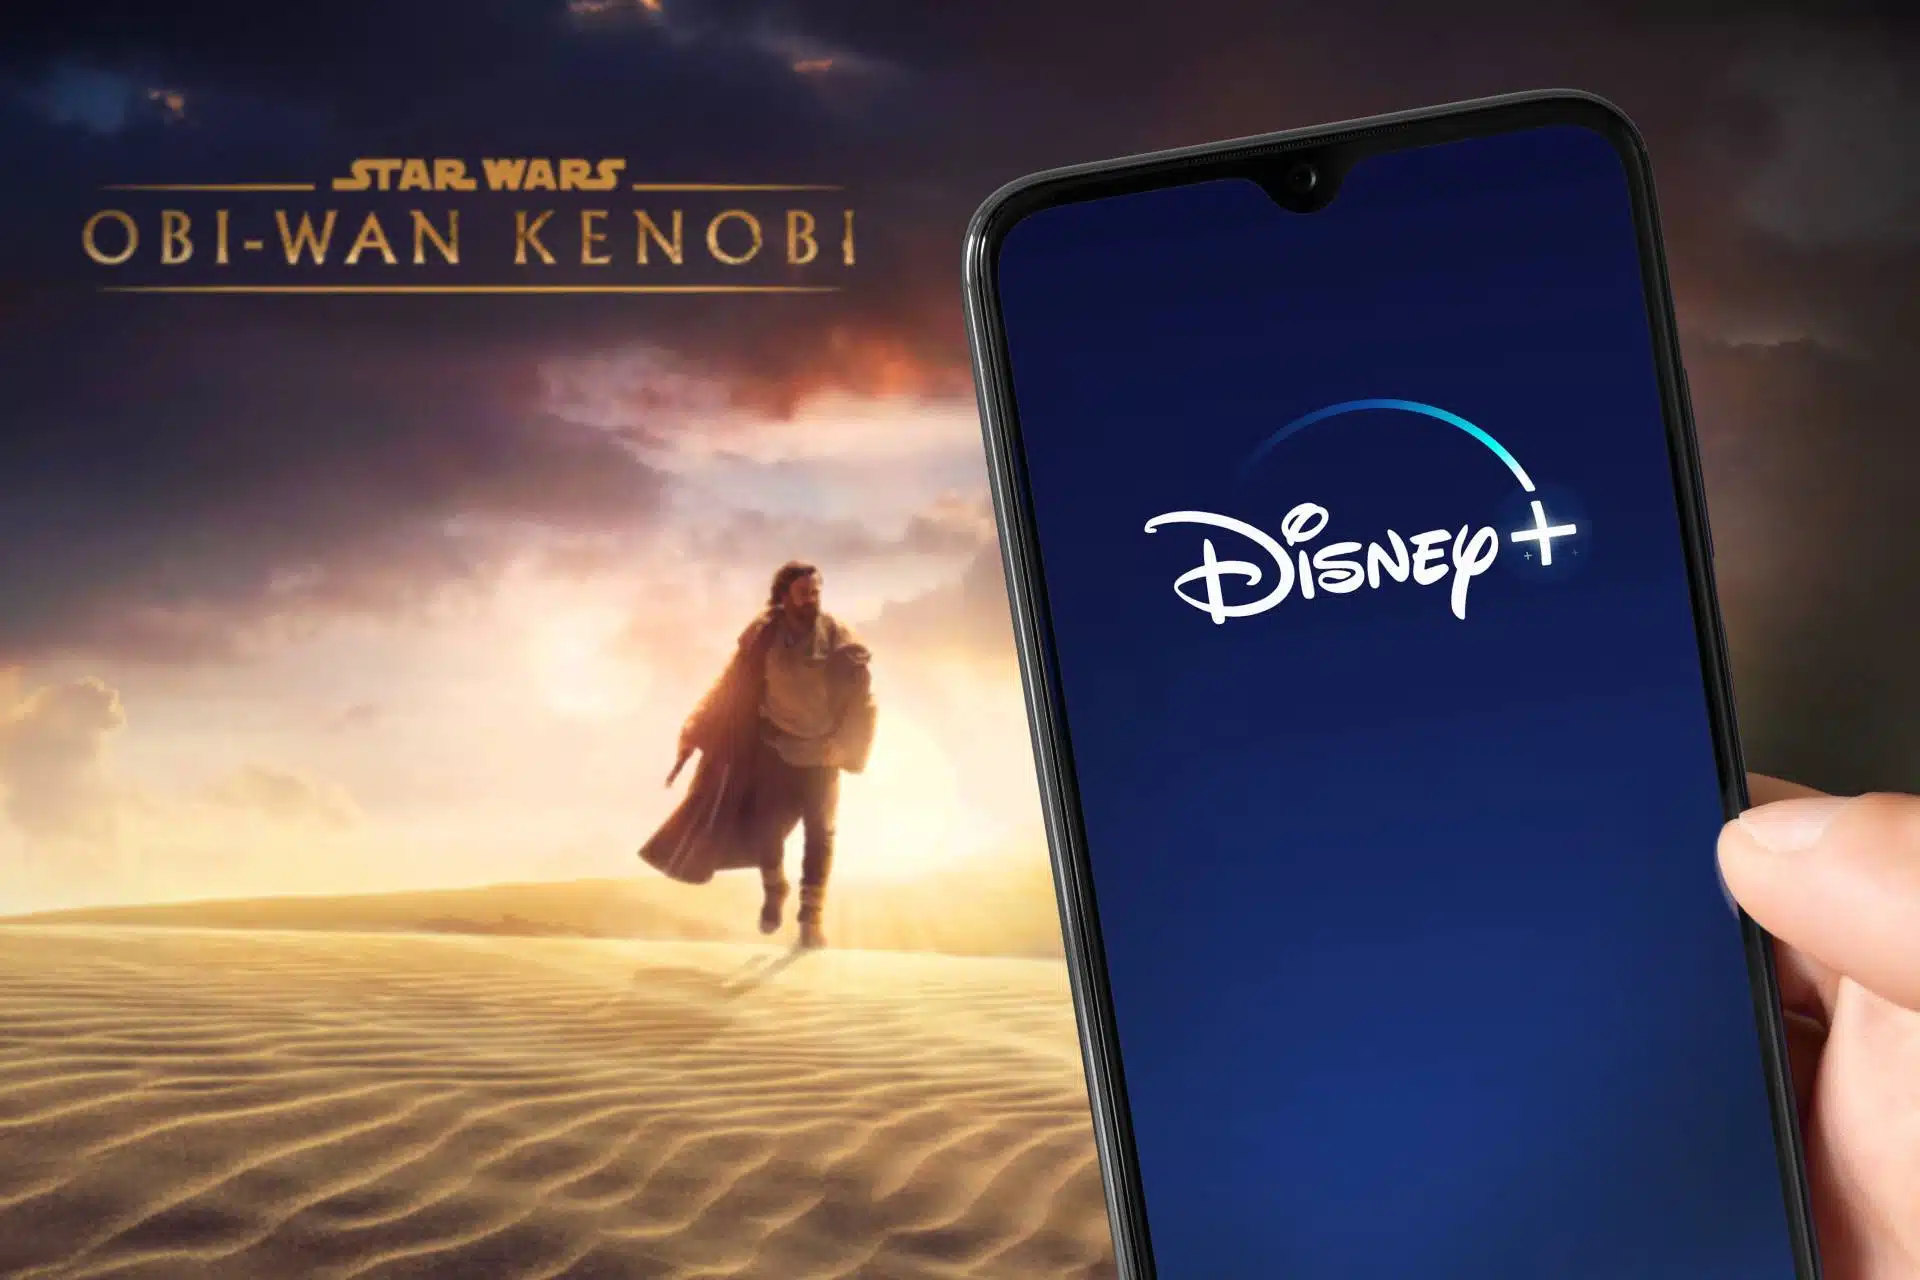 Obi Wan Kenobi - Part III (Lucasfilm) on Disney+